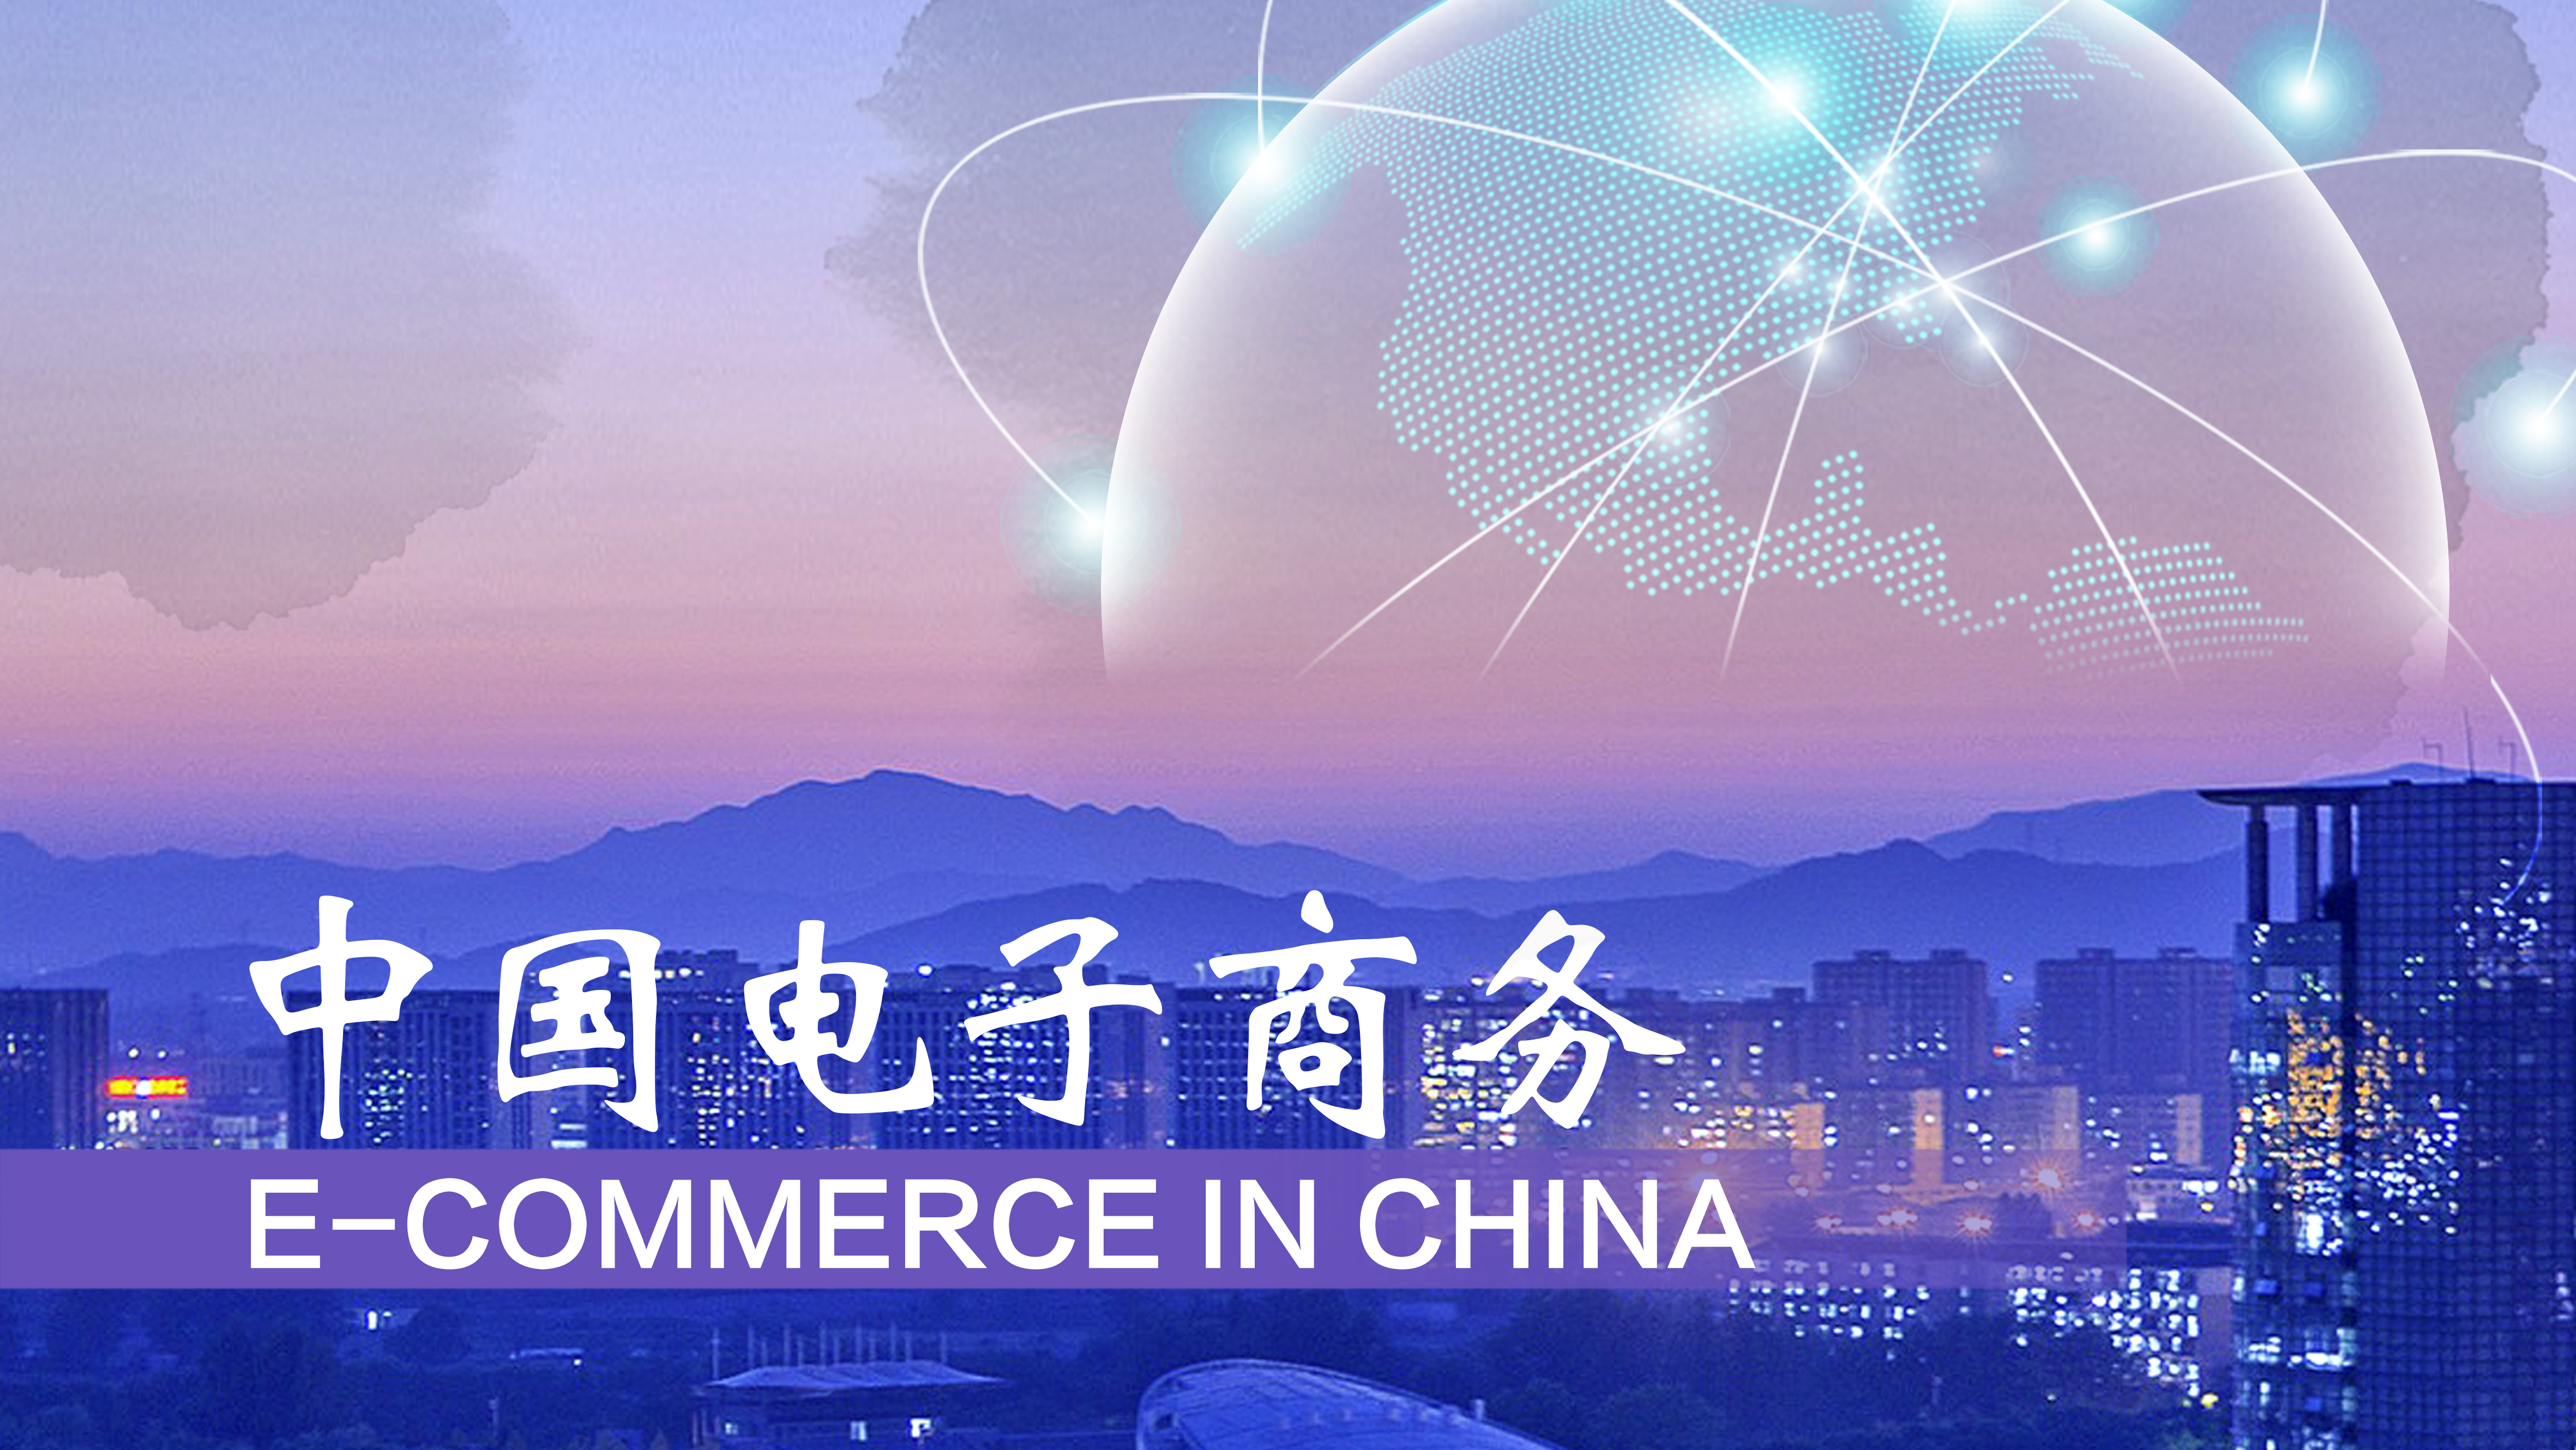 China’s E-Commerce Economy